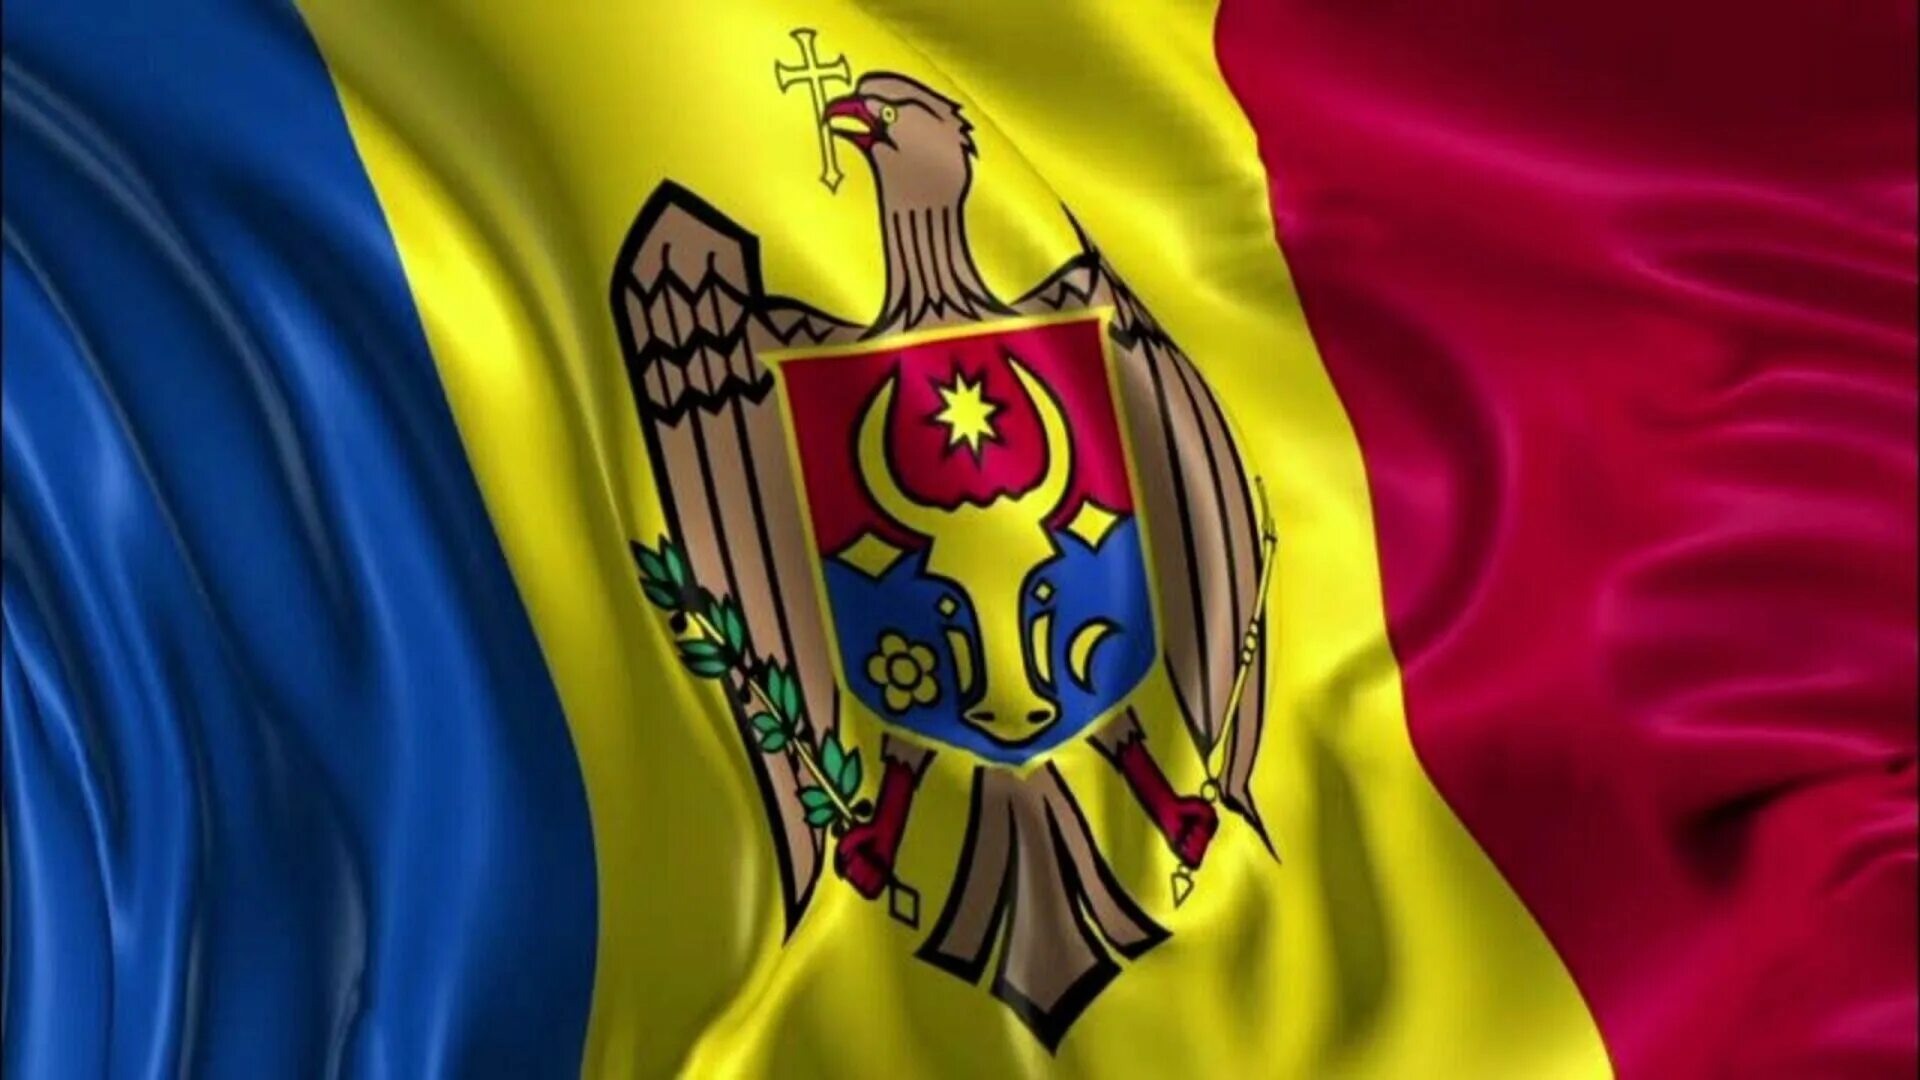 Флаг молдавской республики. Флаг Молдавии. Триколор флаг Молдовы. Флаг Республики Молдова. Флаг Республики Молдавии.